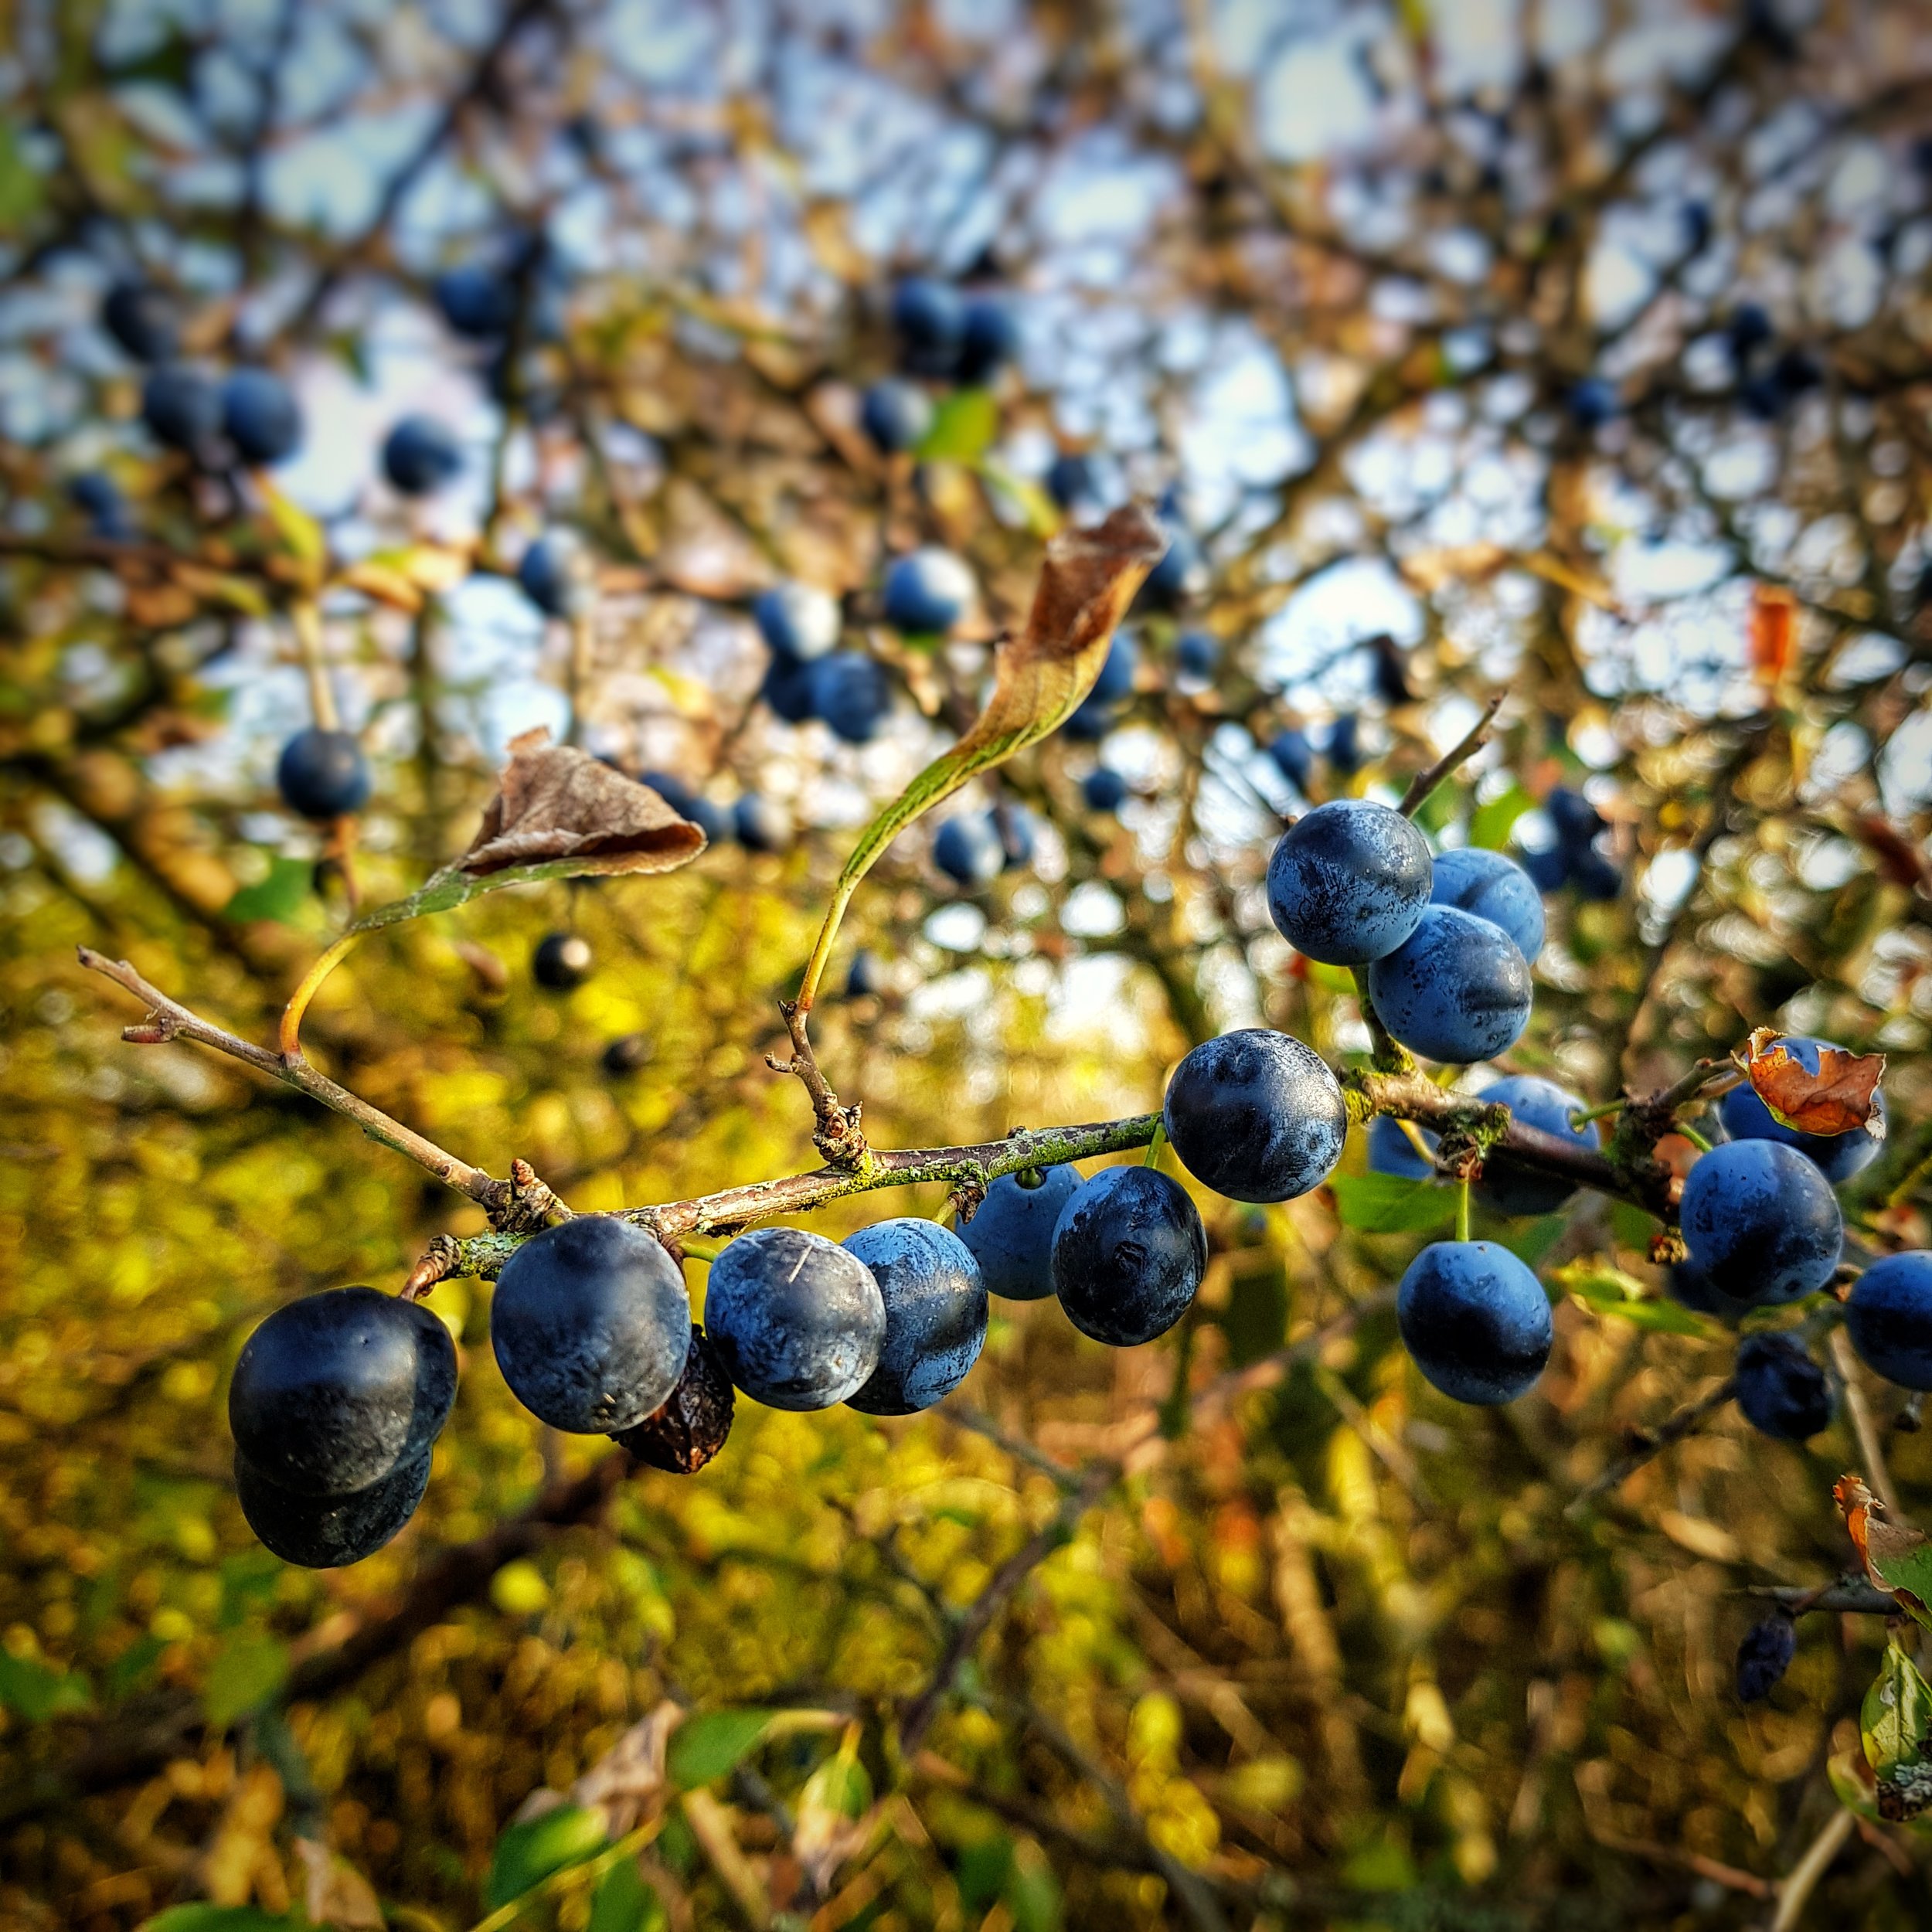 Day 314 - November 10: Berries on a vine